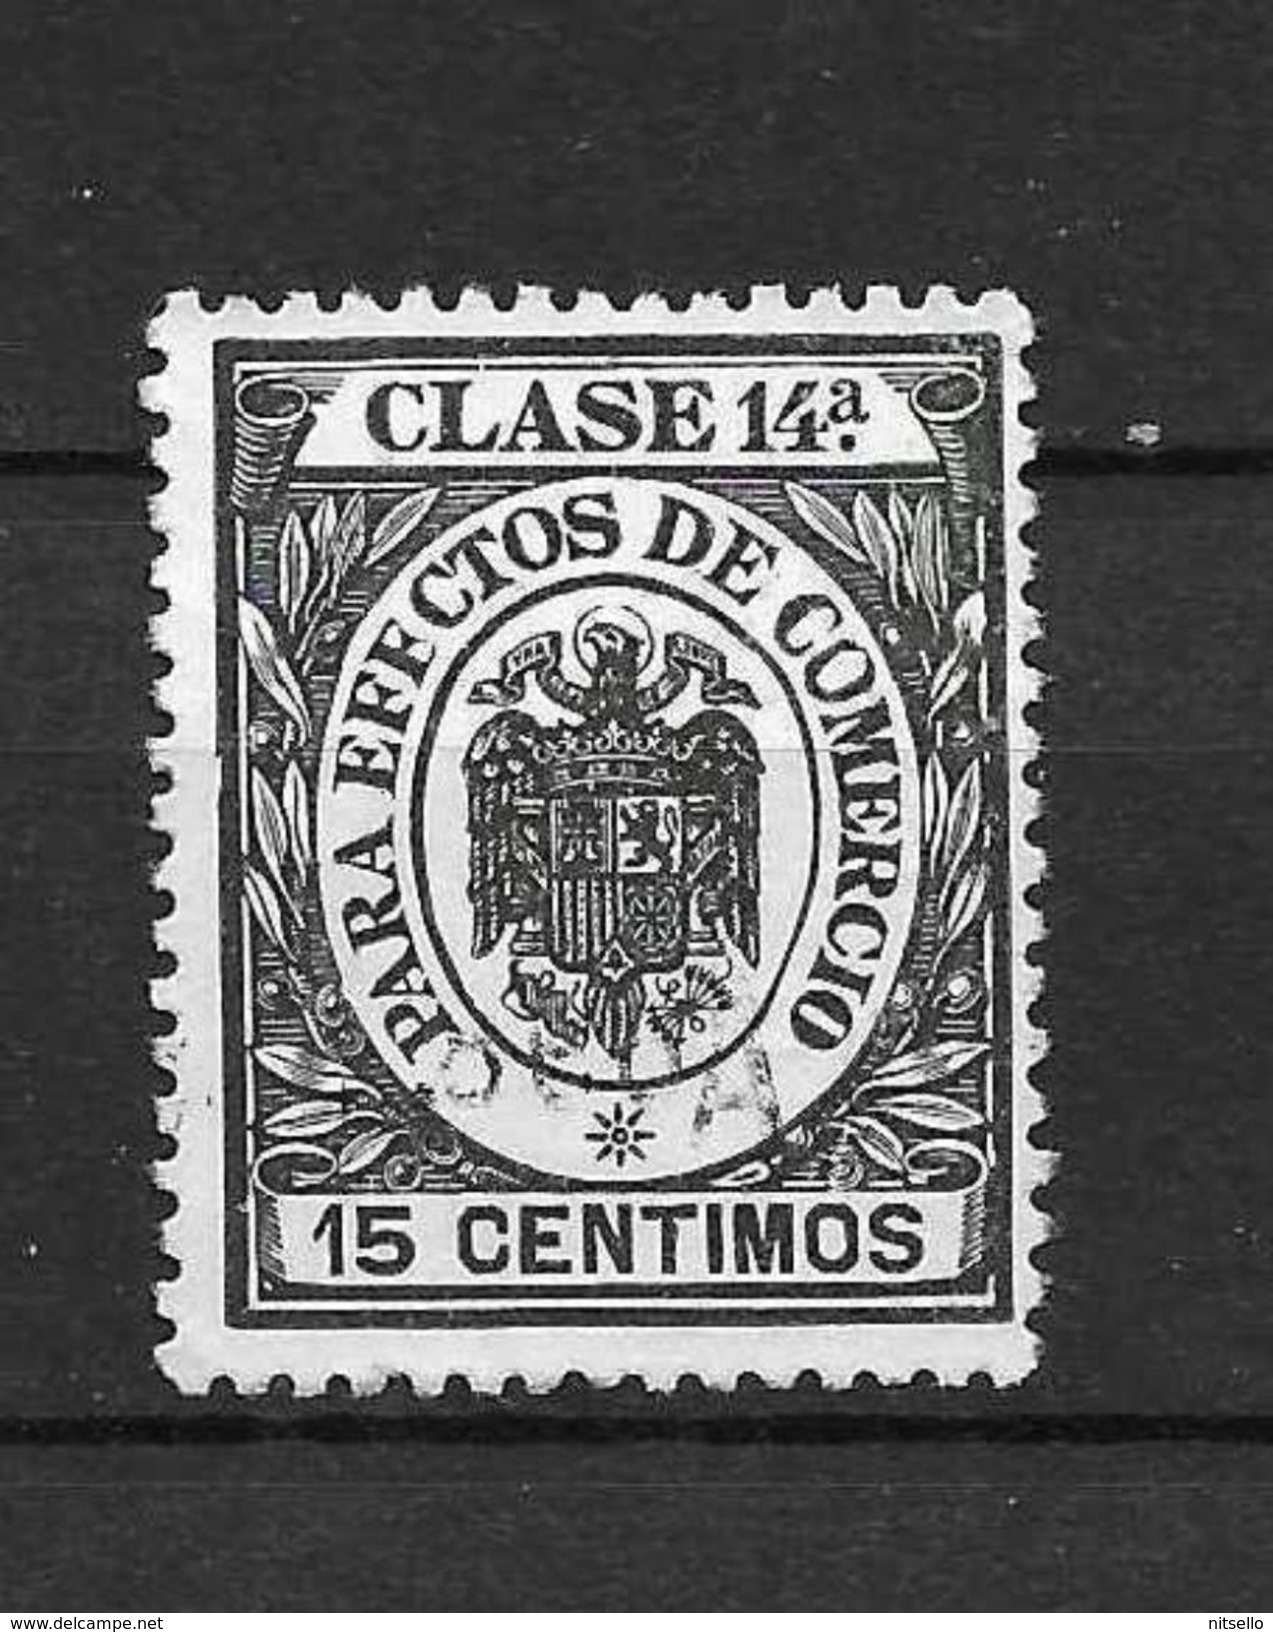 LOTE 1891 D  ///  ESPAÑA  SELLOS FISCALES  -  PARA EFECTOS DE COMERCIO CLASE 14ª - Fiscales